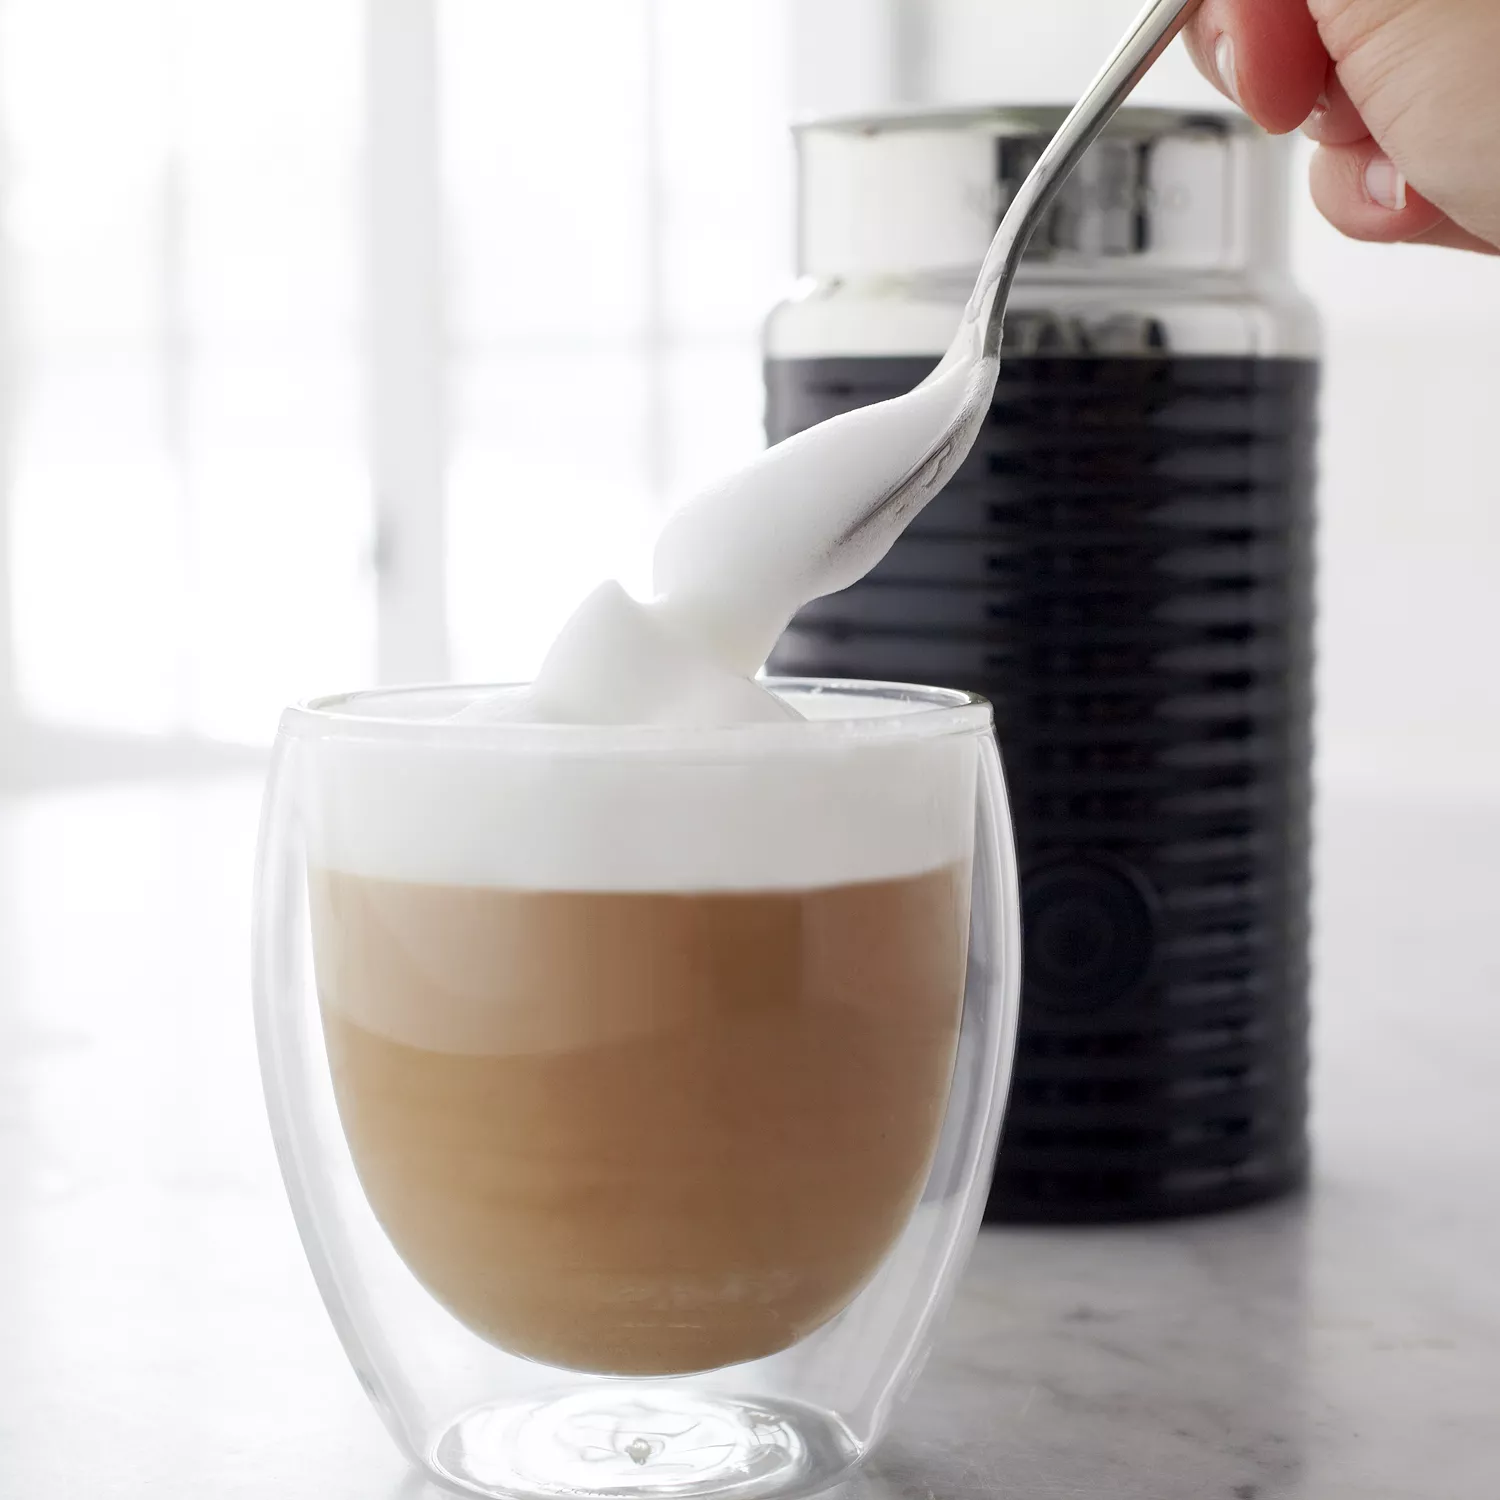 Nespresso Aeroccino 3 Milk Frother Review 